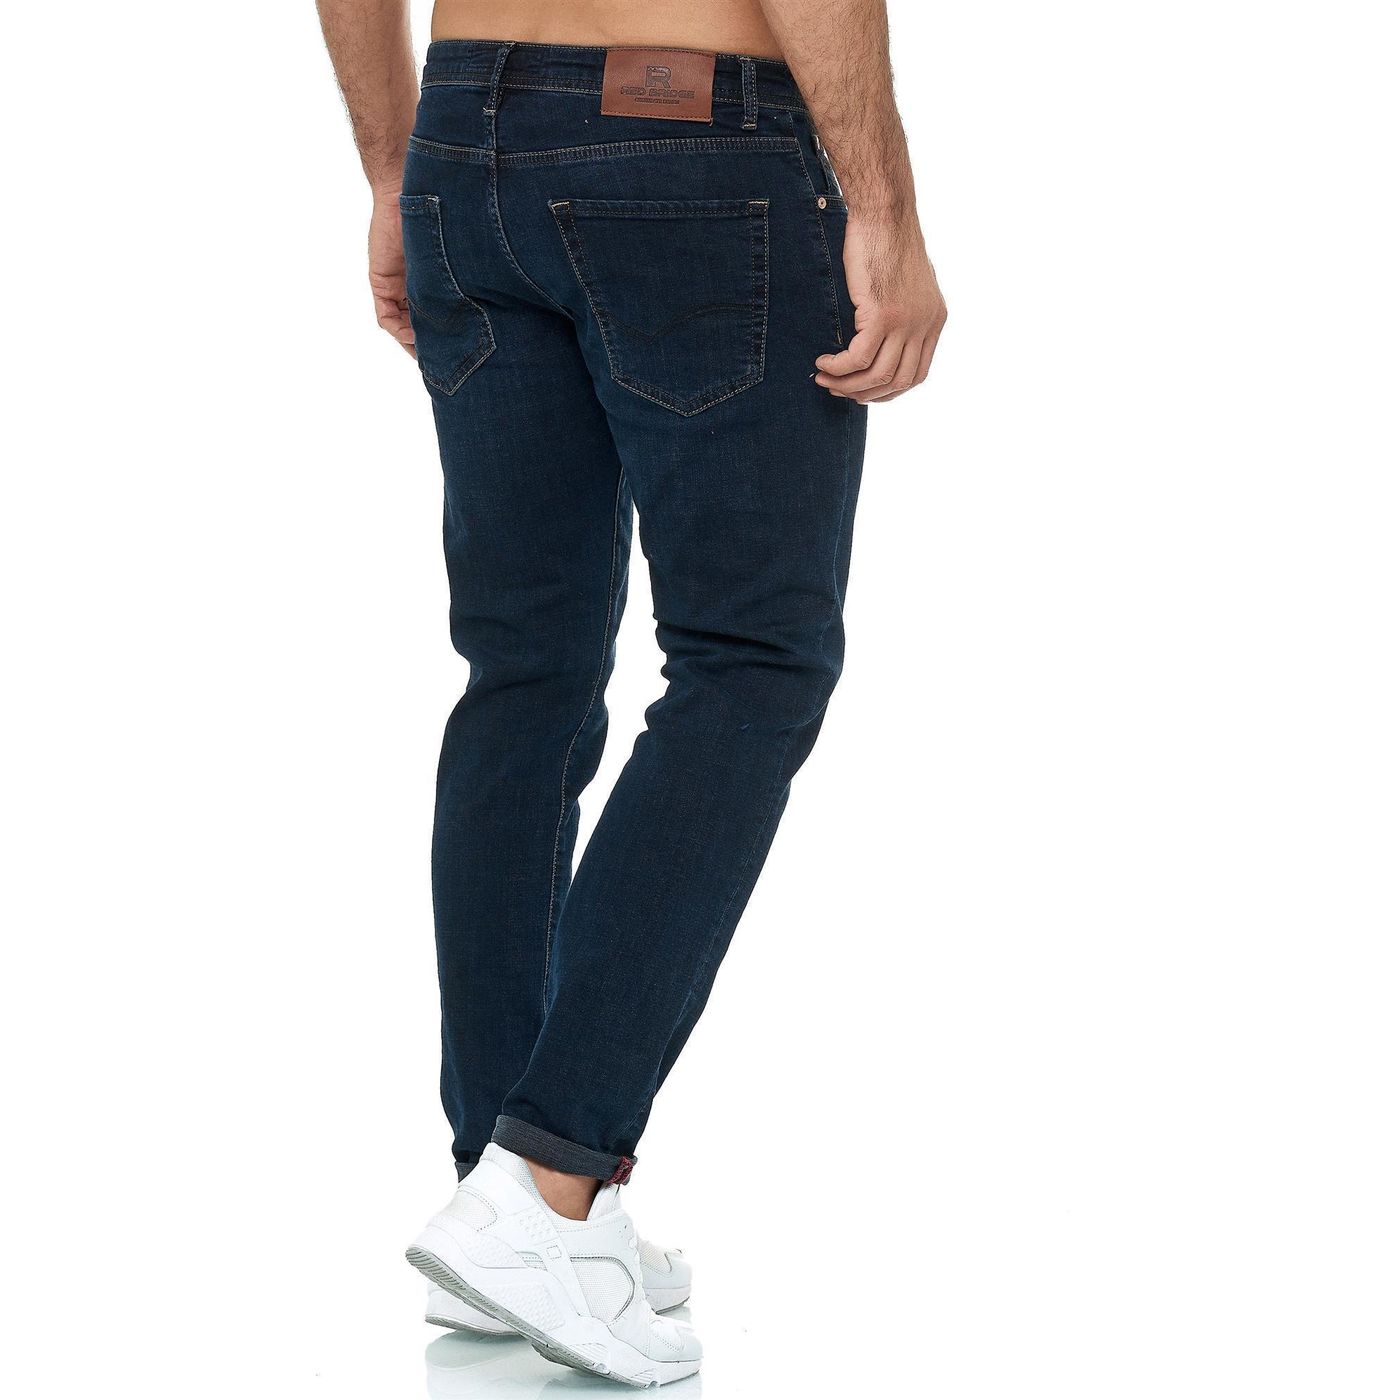 Men's Ripped Jeans Stretch Washed Blue Boys Jean Trouser Skinny Slim Denim  Pants | eBay